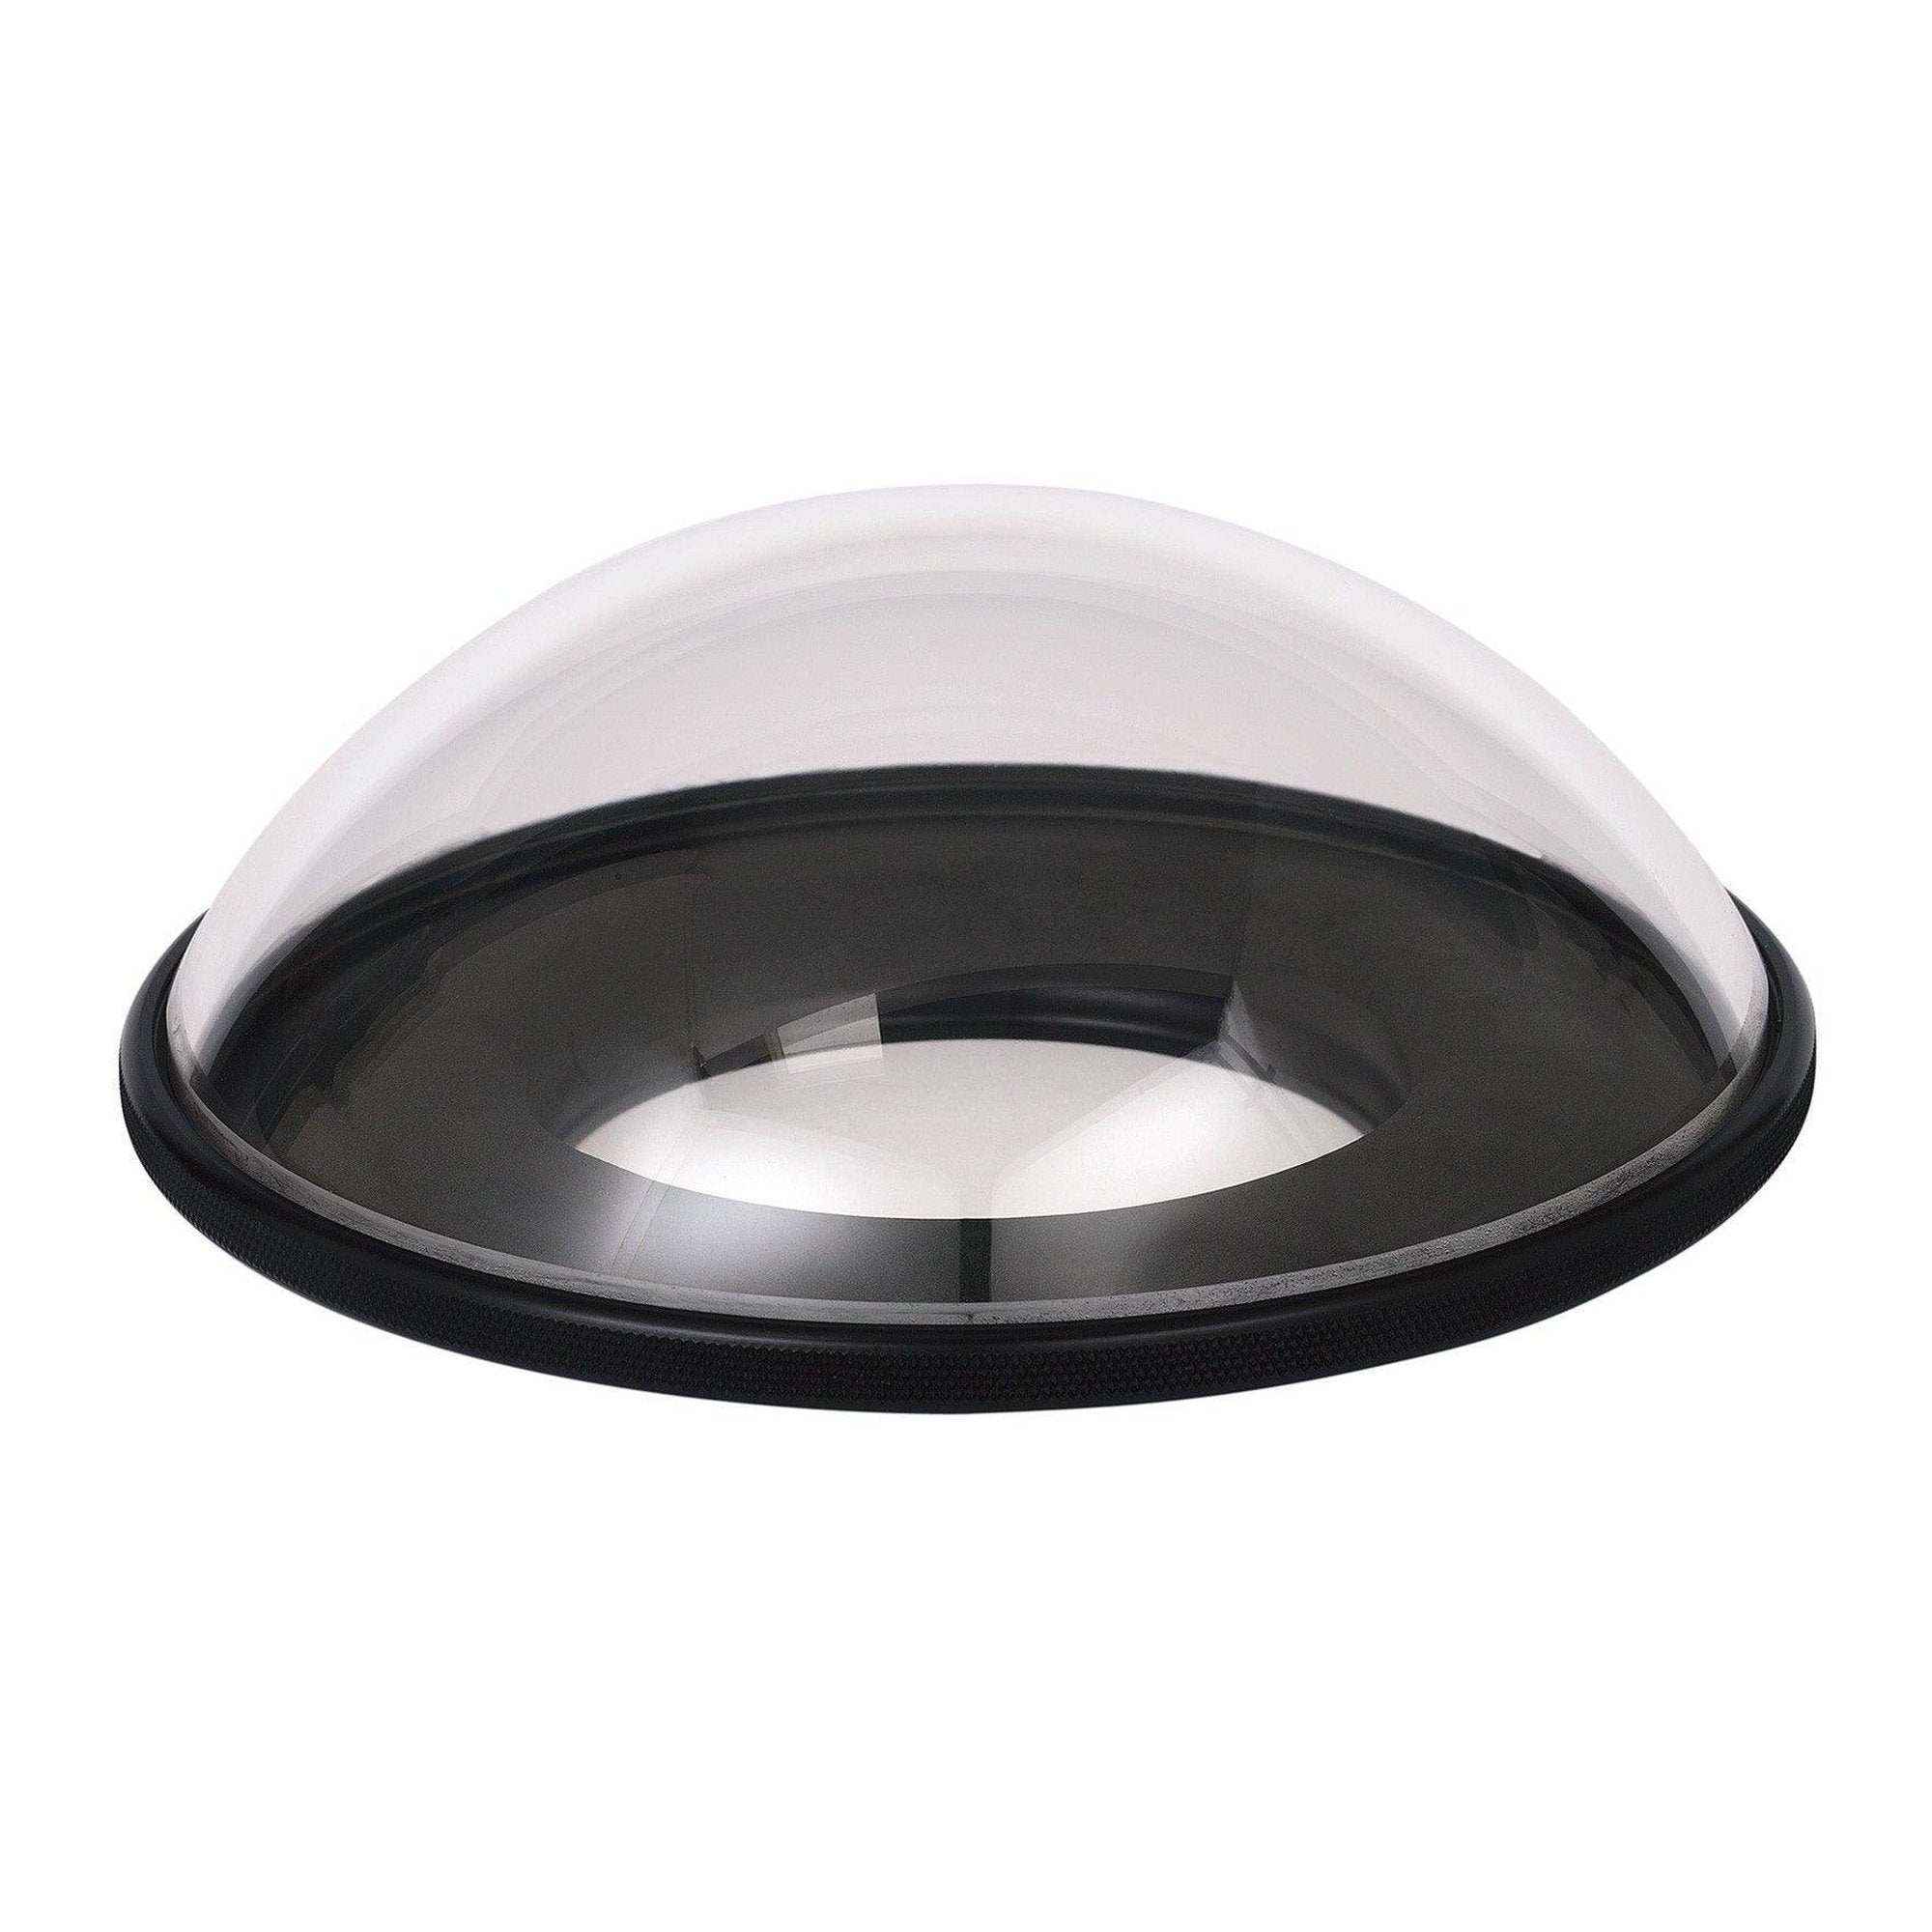 LP-3 Dome Lens Port - CLEARANCE